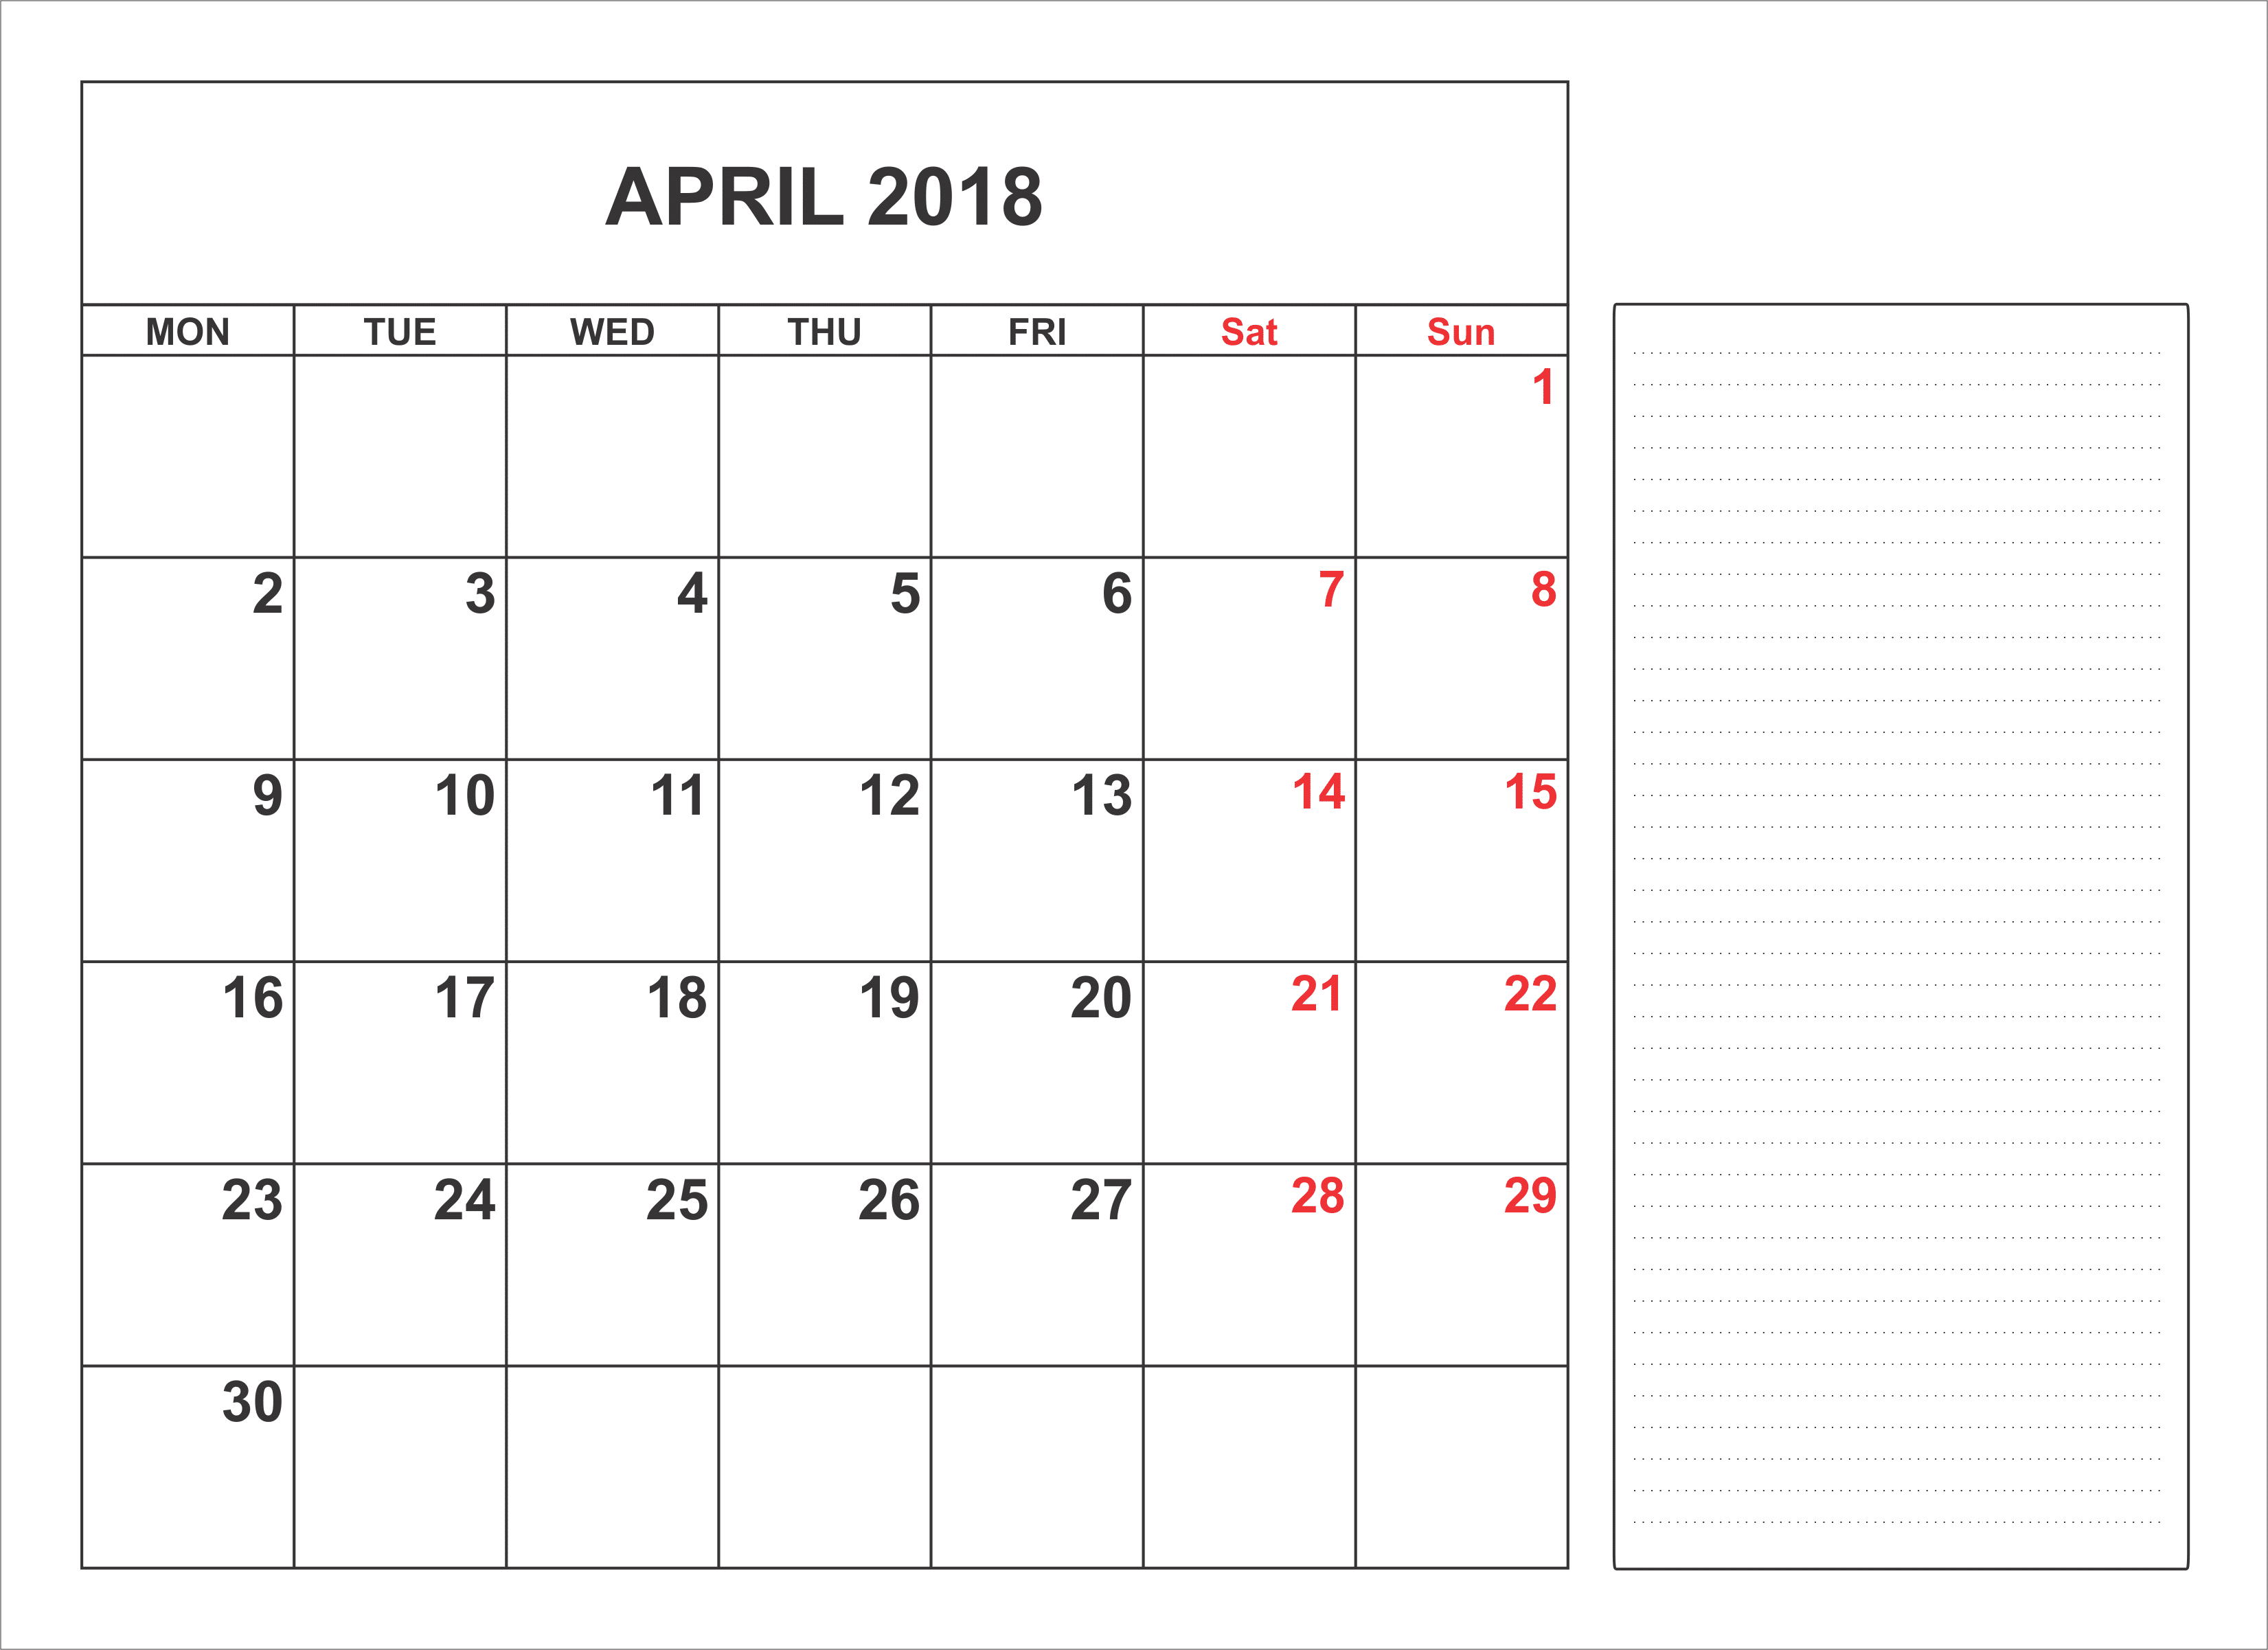 April 2018 Calendar Hd Image Oppidan Library